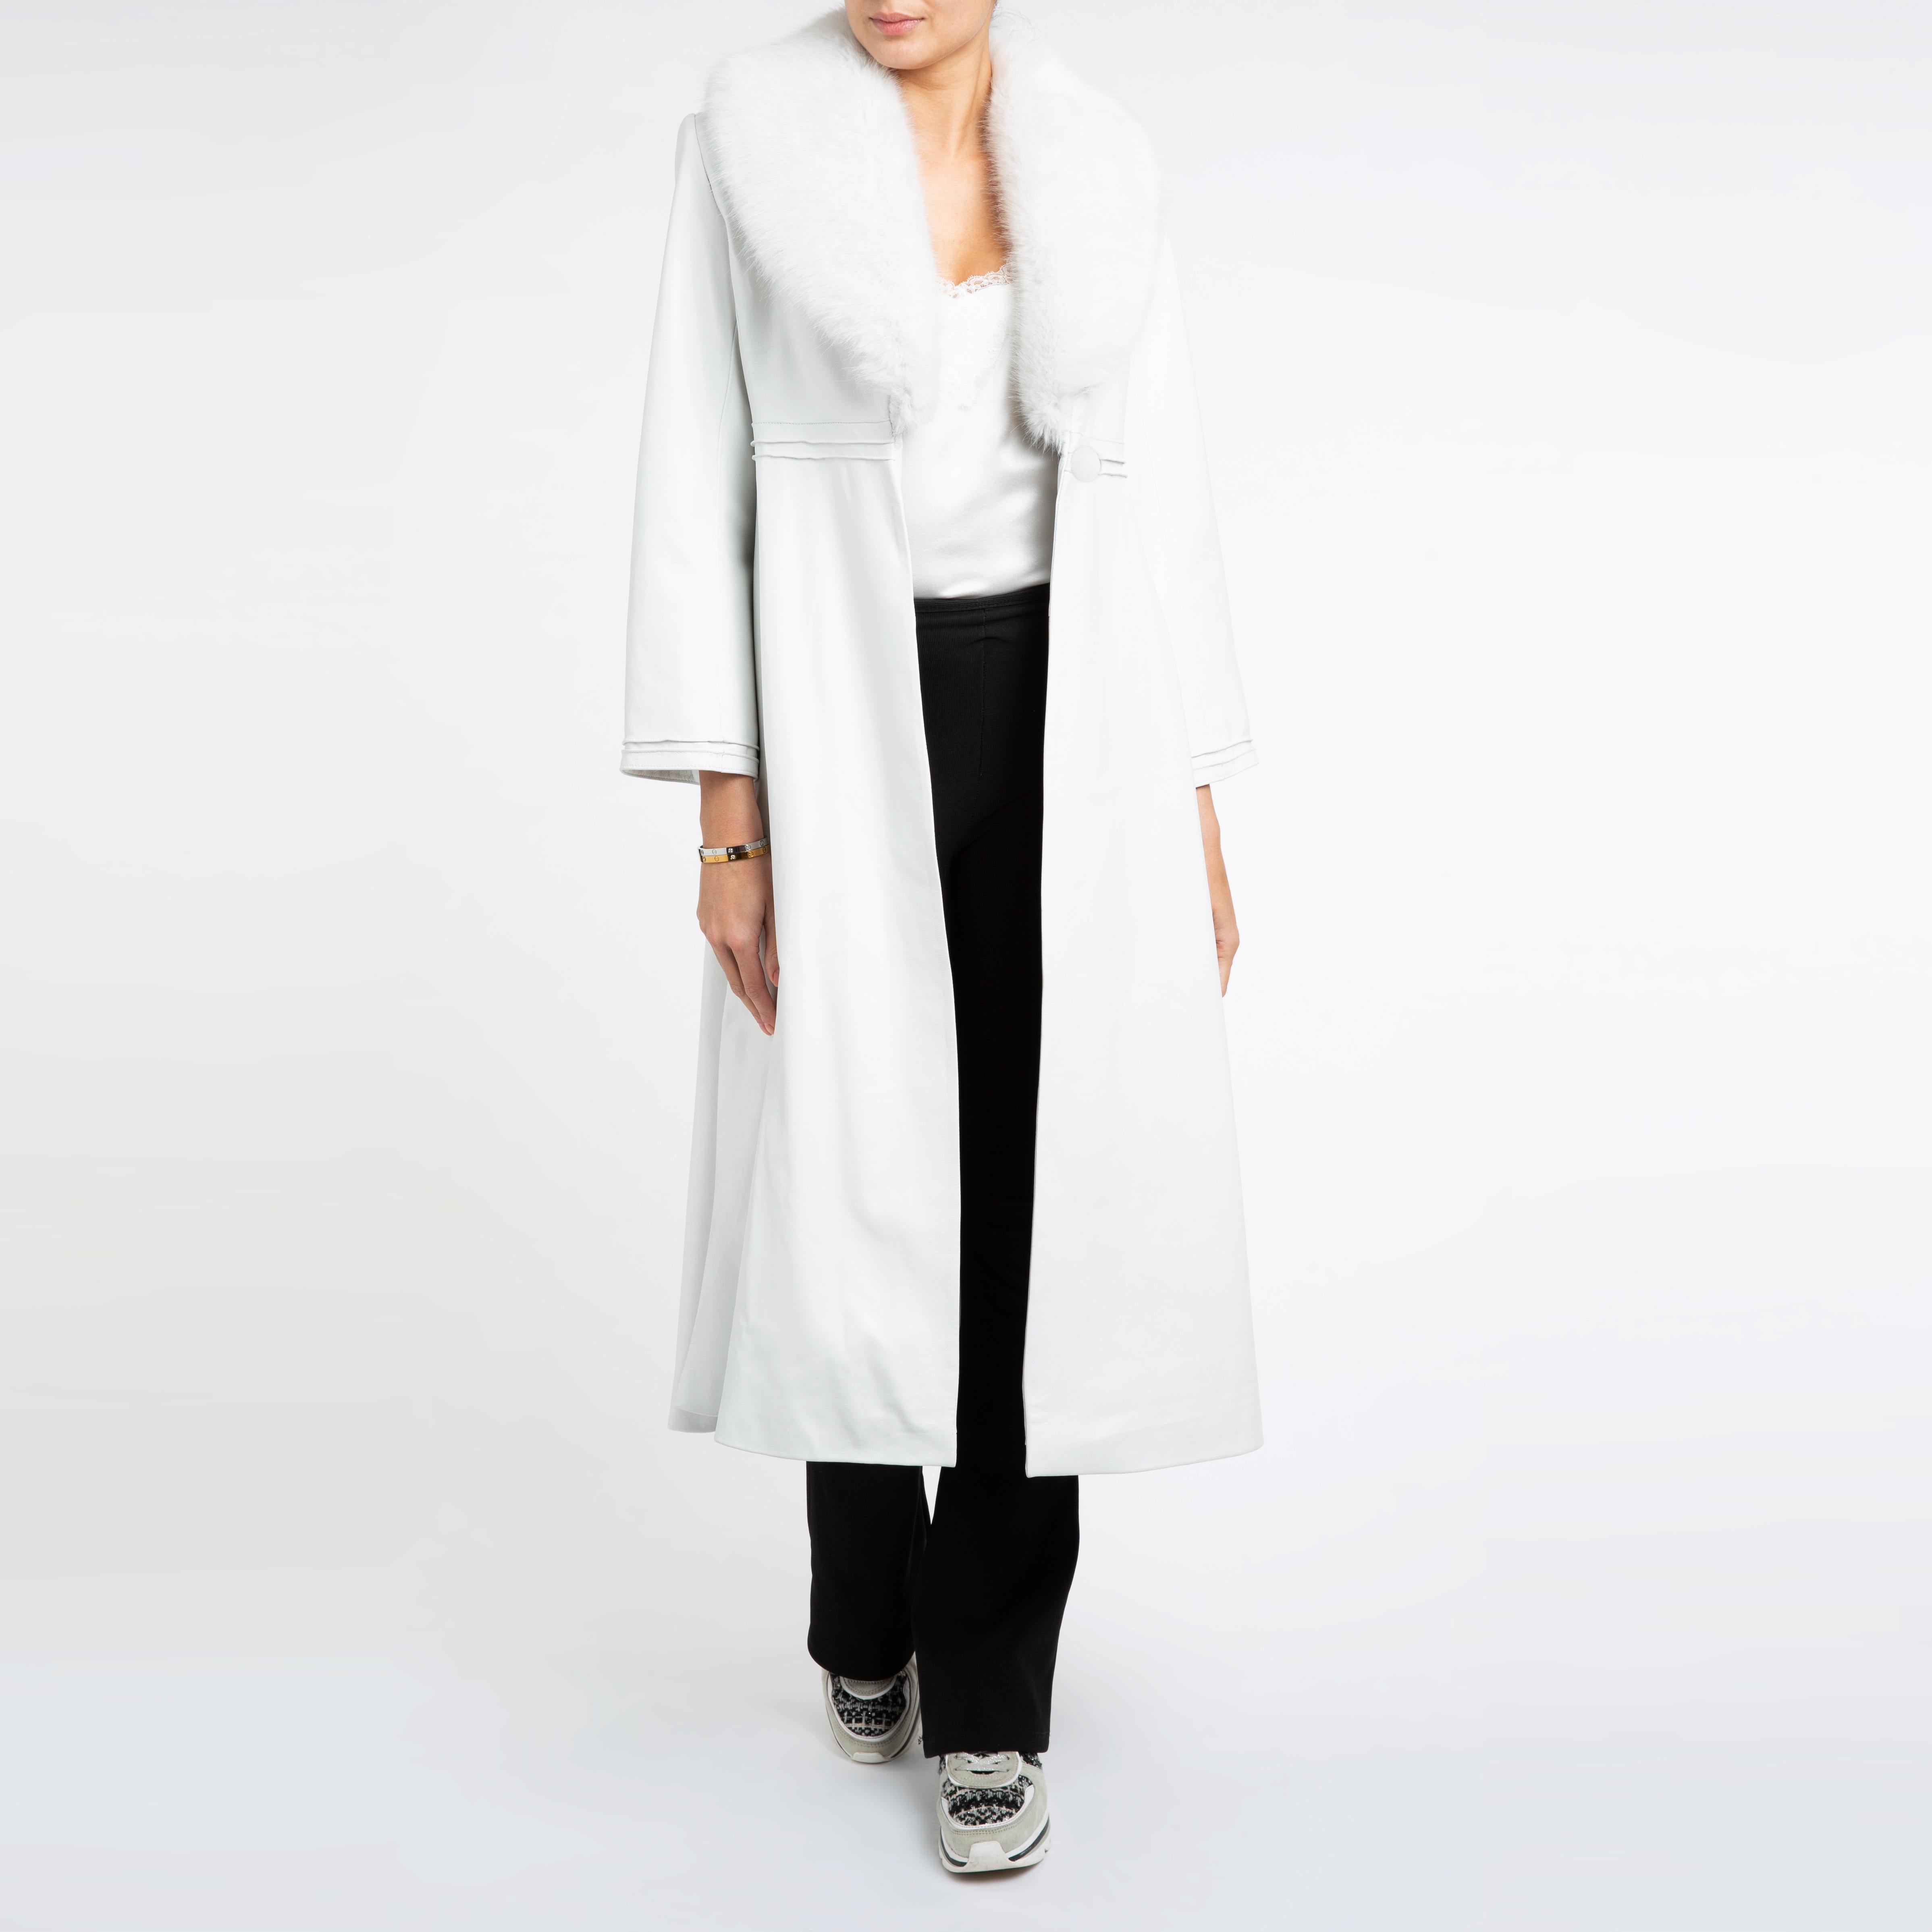 Verheyen London Edward Leather Coat in White with Faux Fur - Size uk 12 For Sale 6